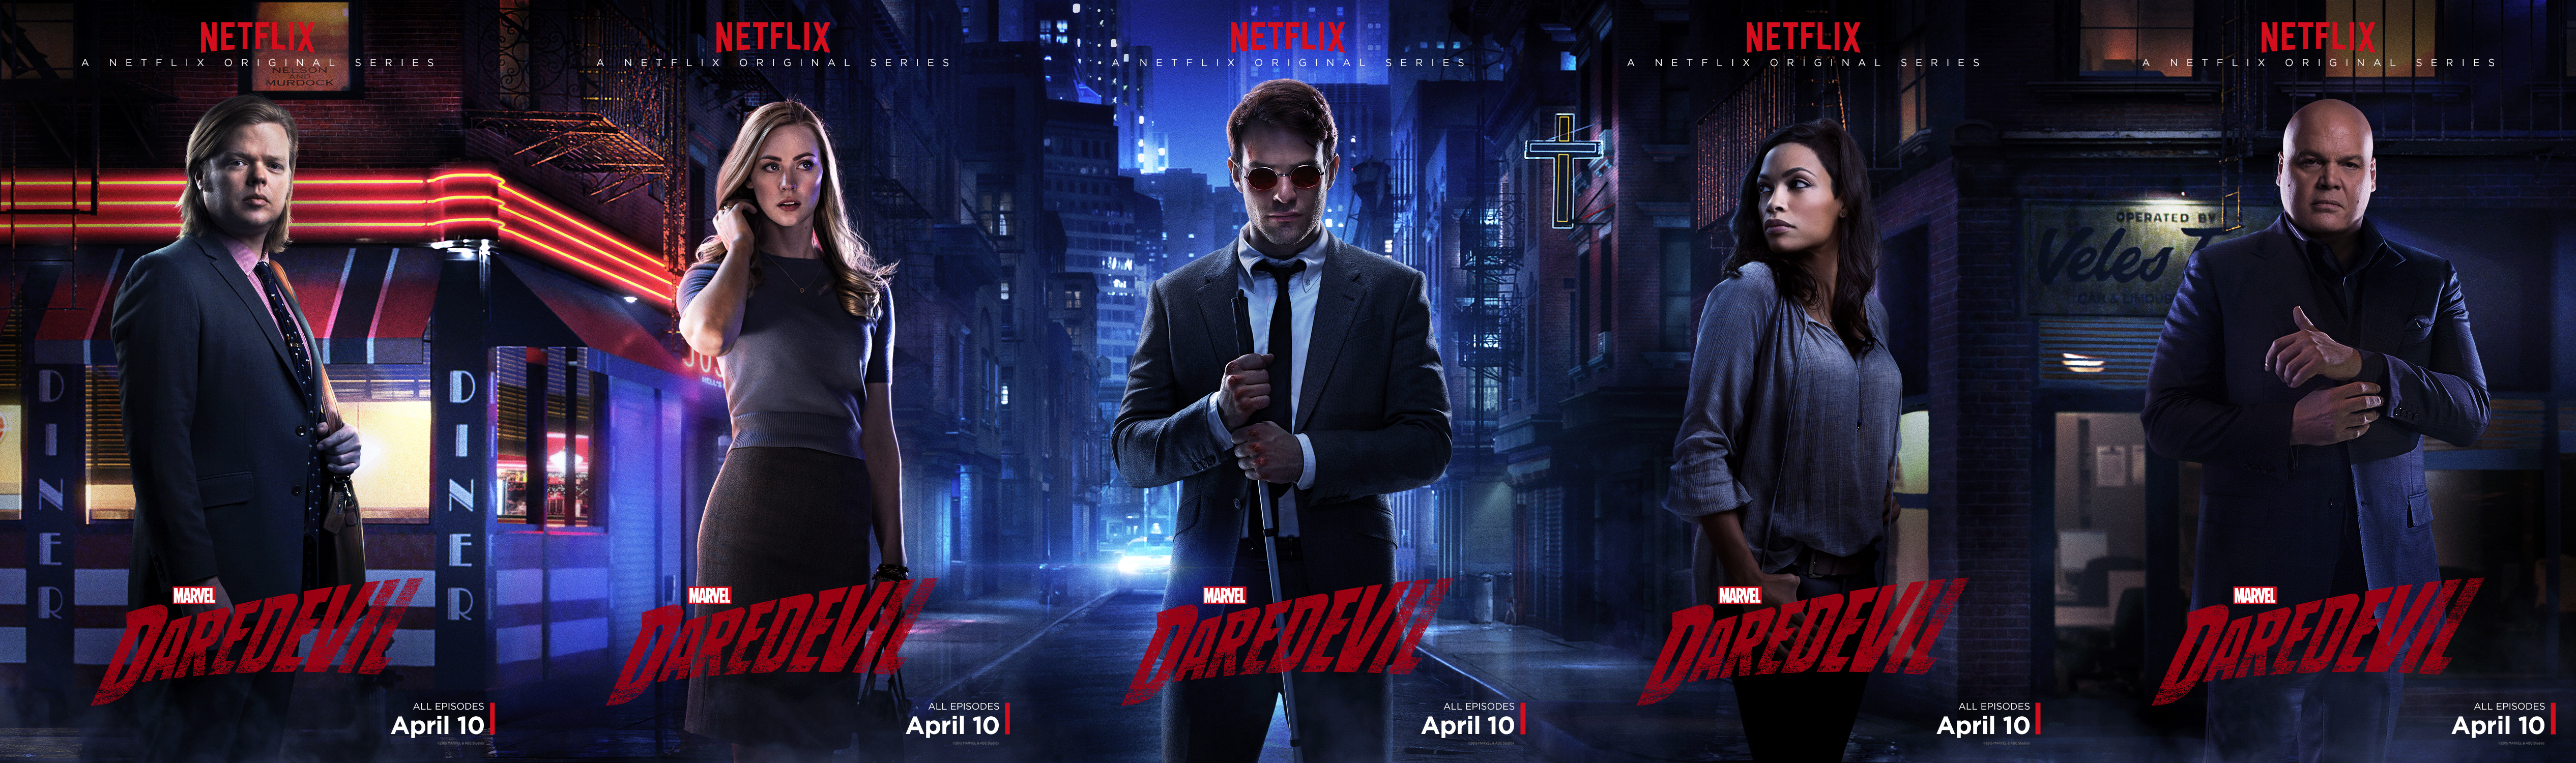 "Daredevil" Review Netflix Series Has No Fear